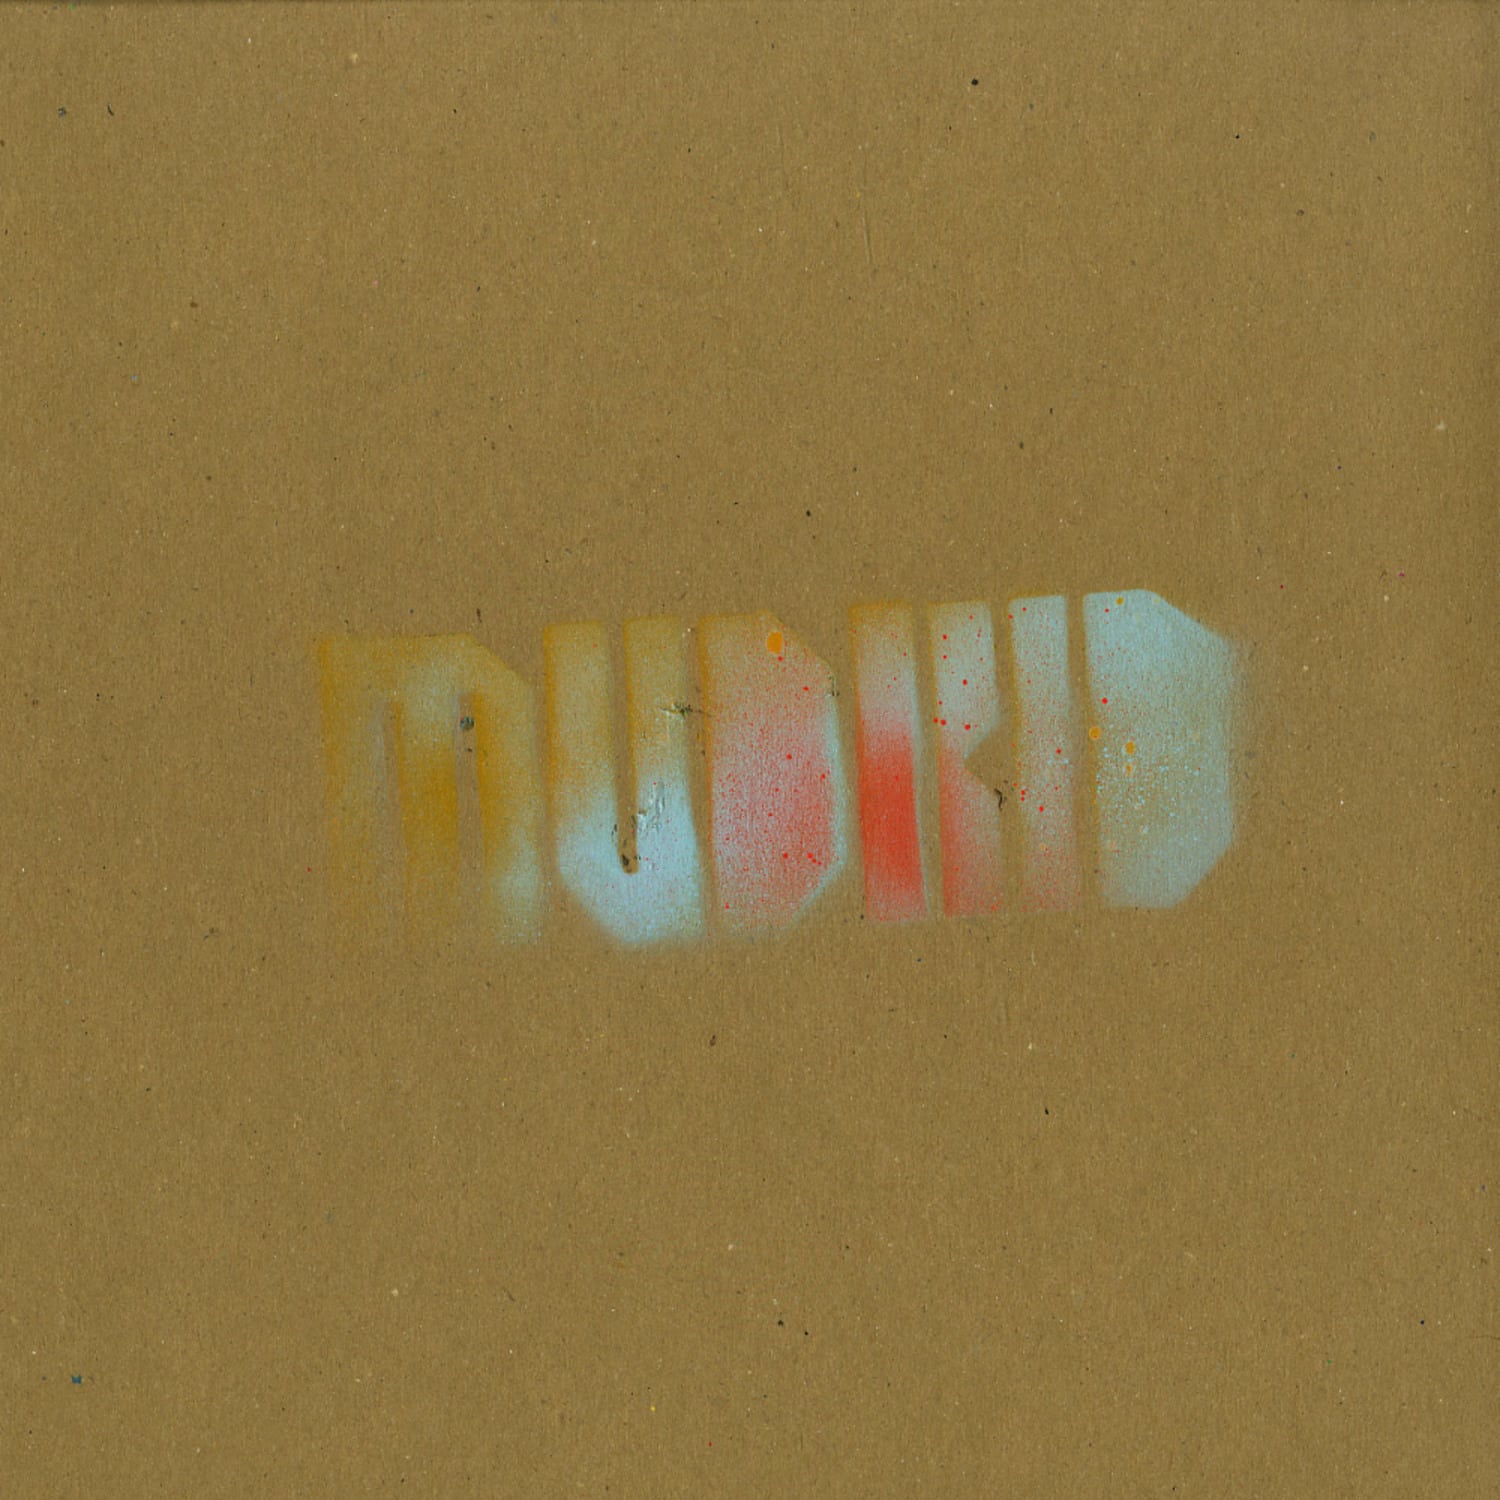 Mudkid - MUDDY BLUES EP 